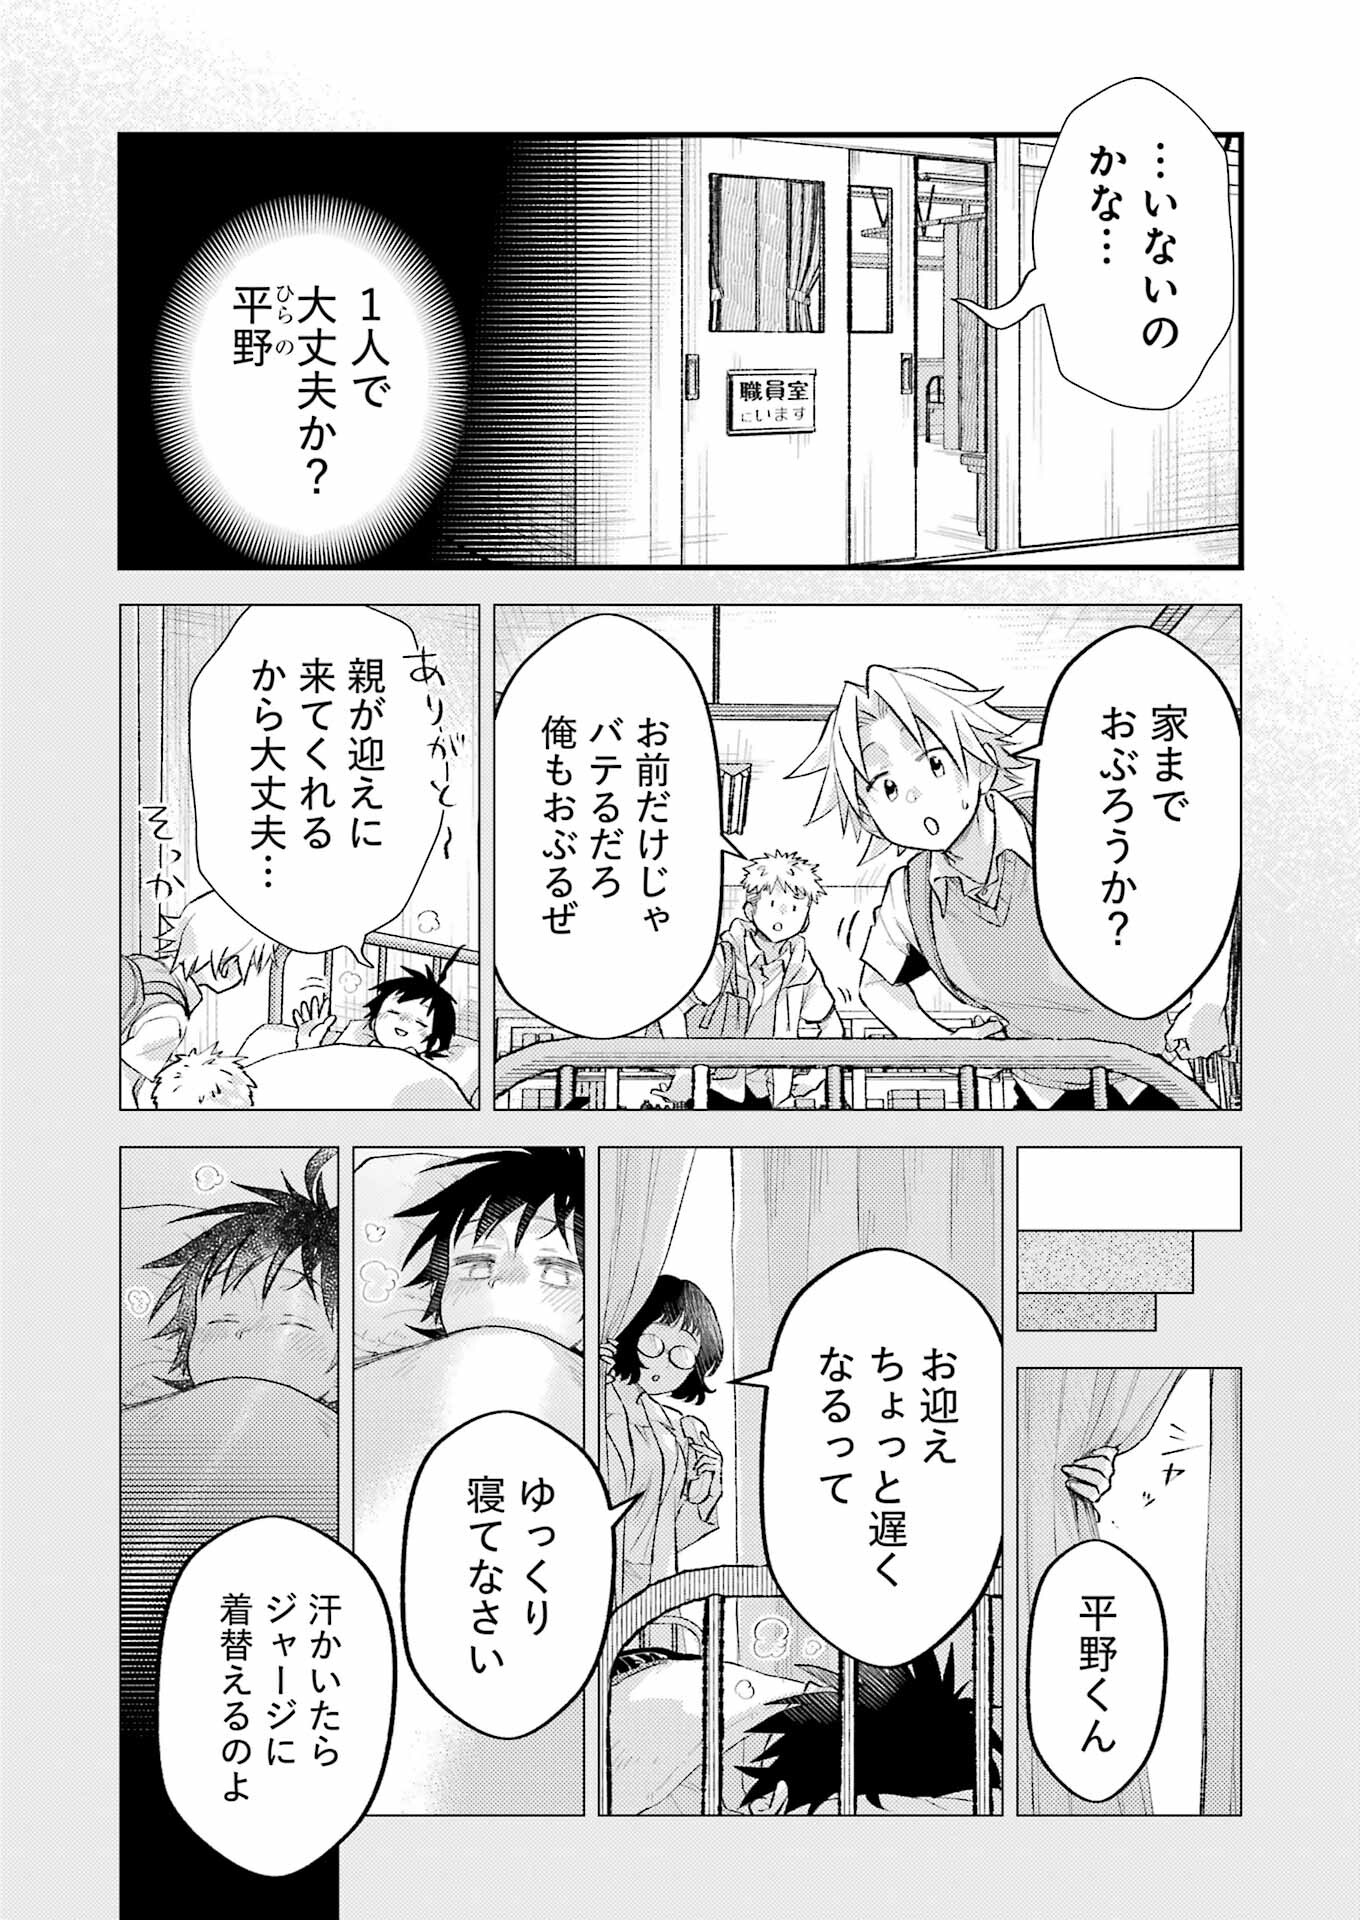 Ura de Yancha na Gouinda-san - Chapter 12 - Page 2